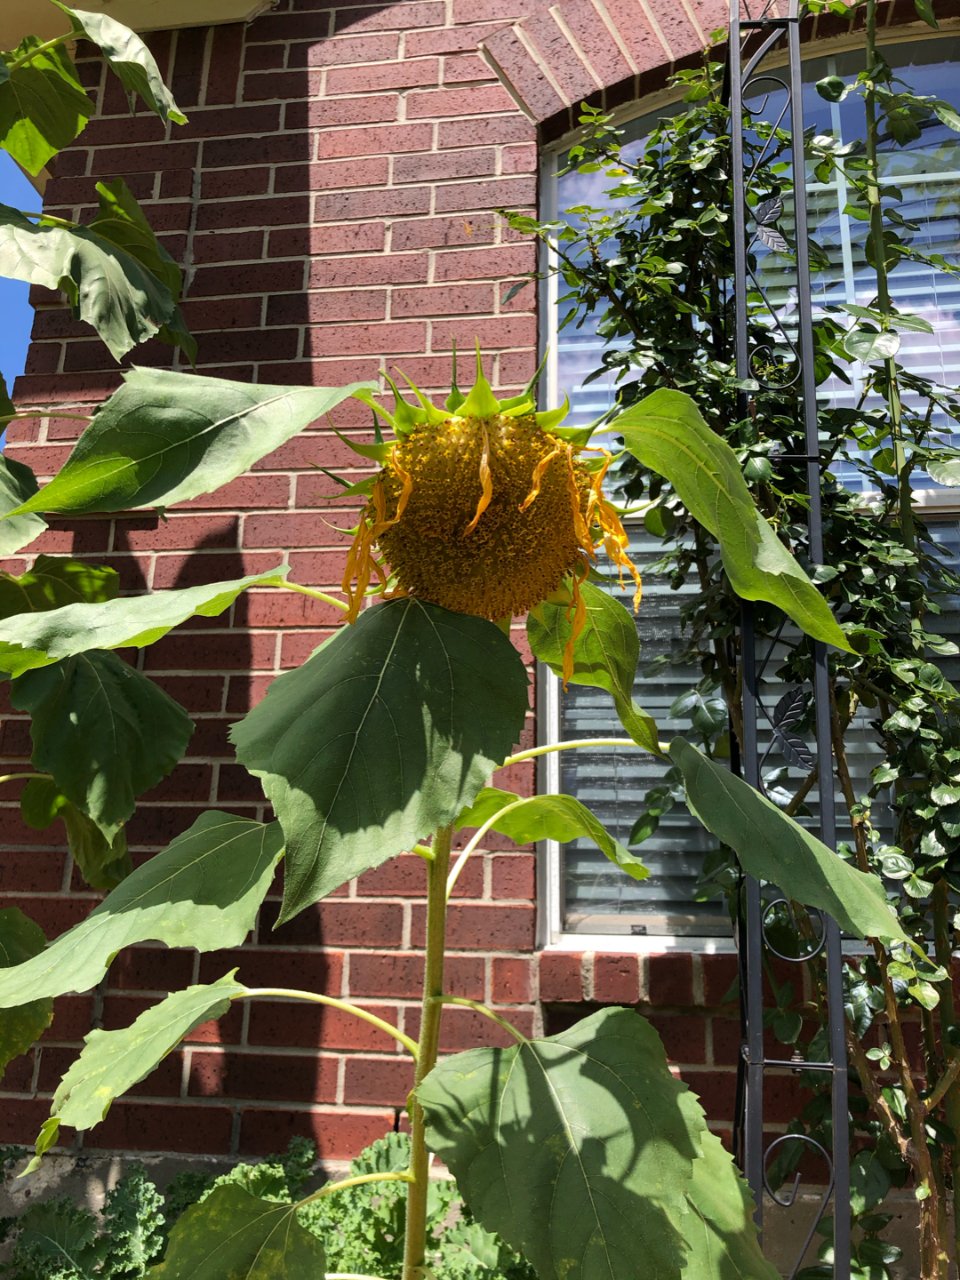 Sunflower 向日葵